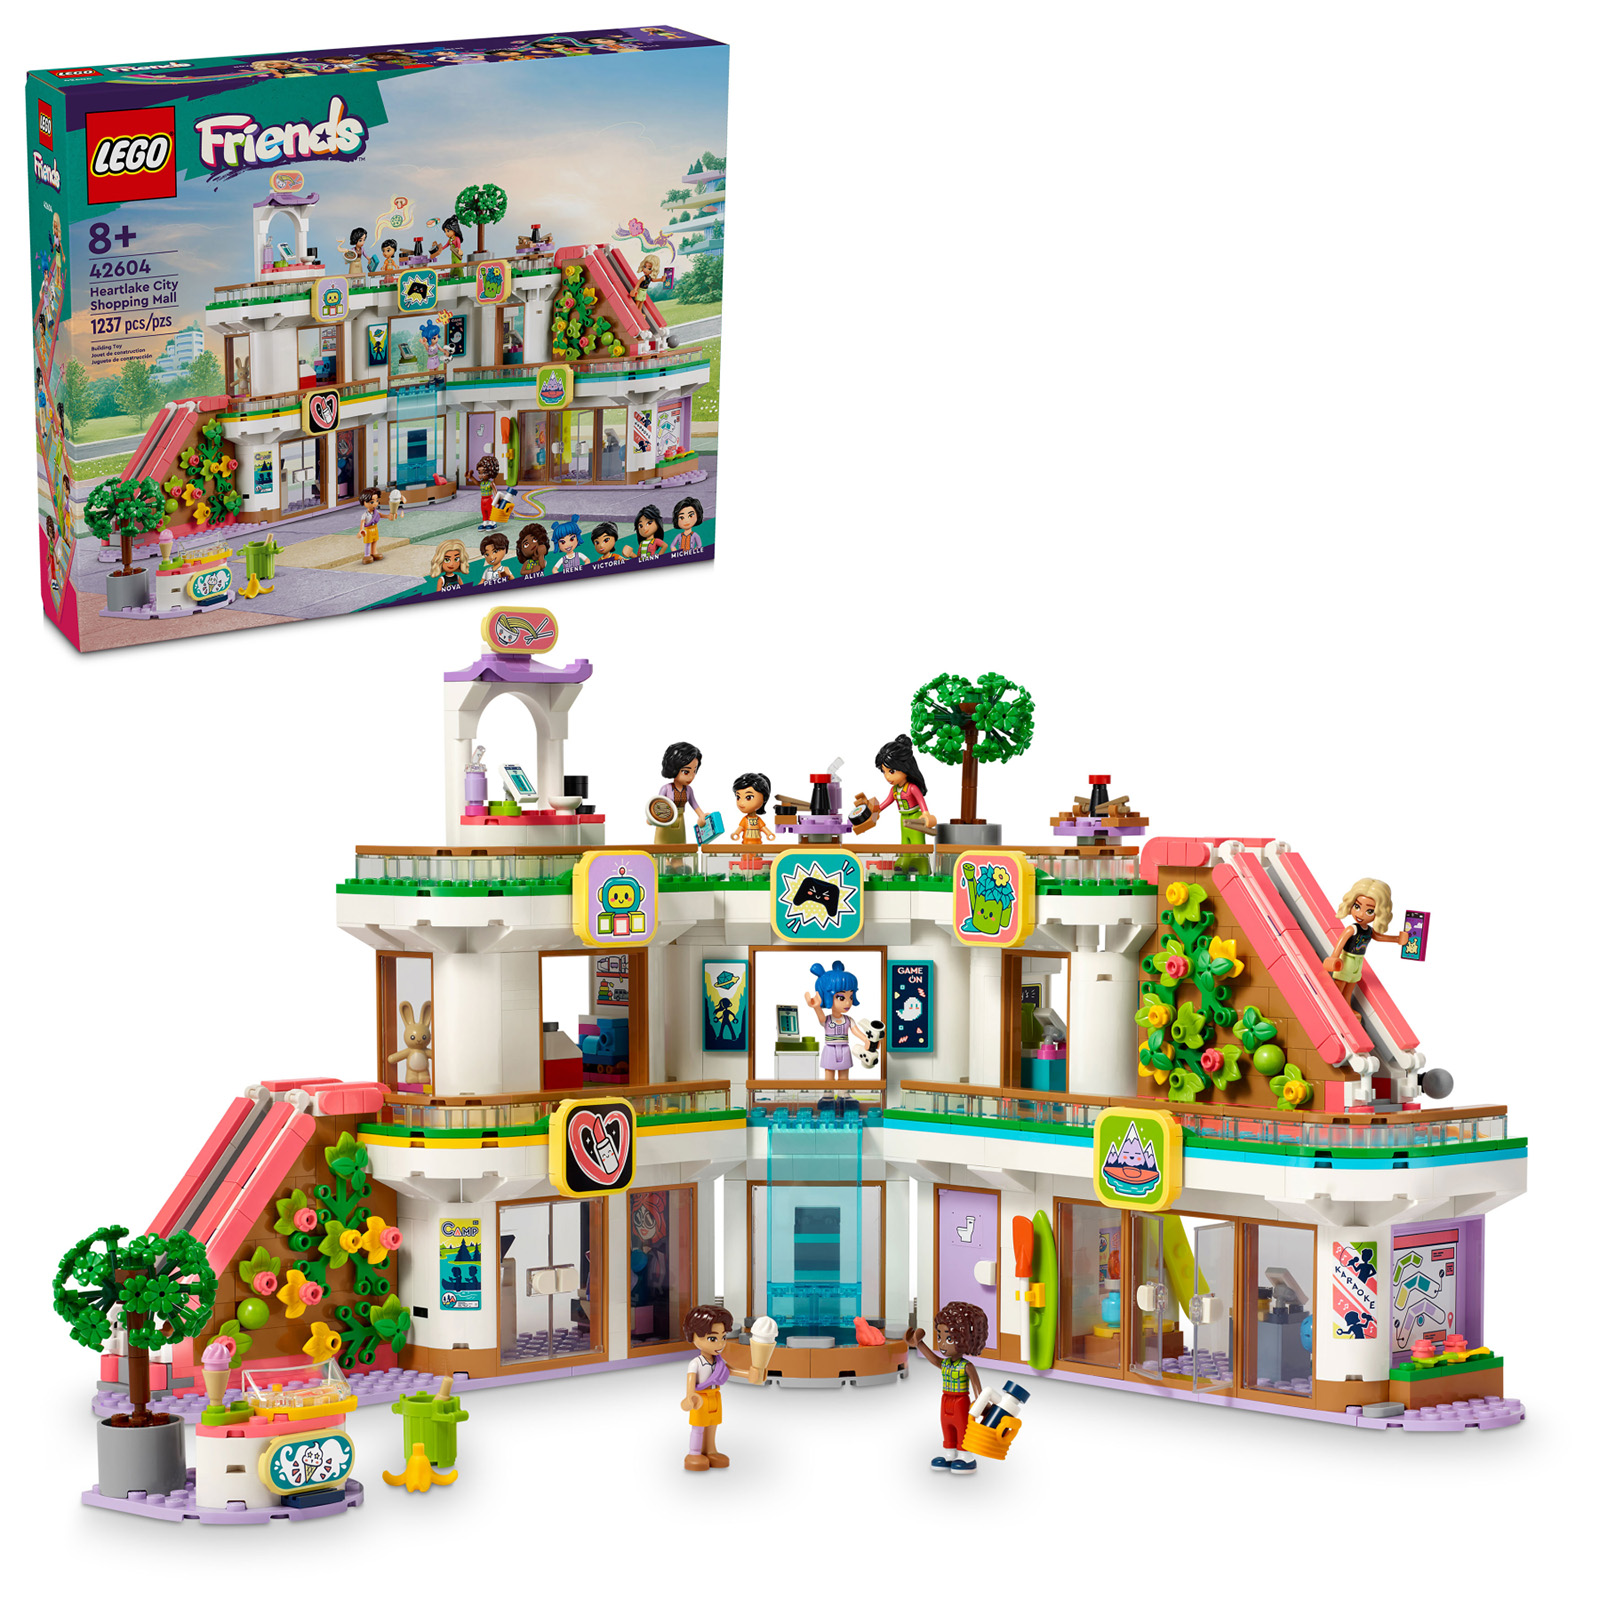 42604 Lego Friends Heartlake City Shopping Mall 1 